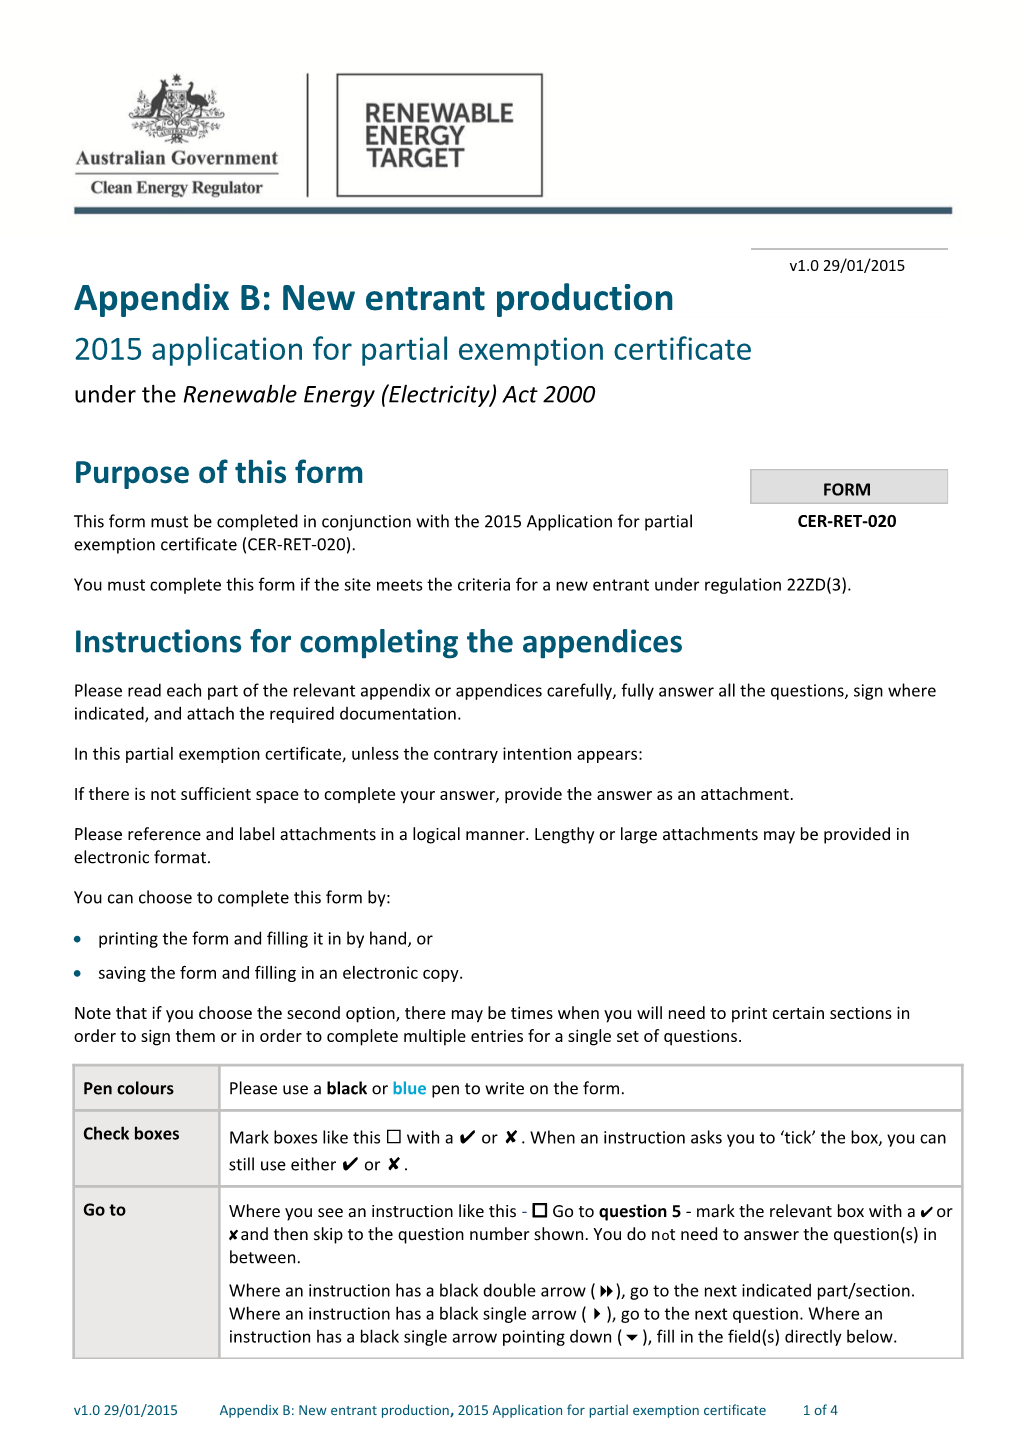 Appendix B New Entrant Production DOC